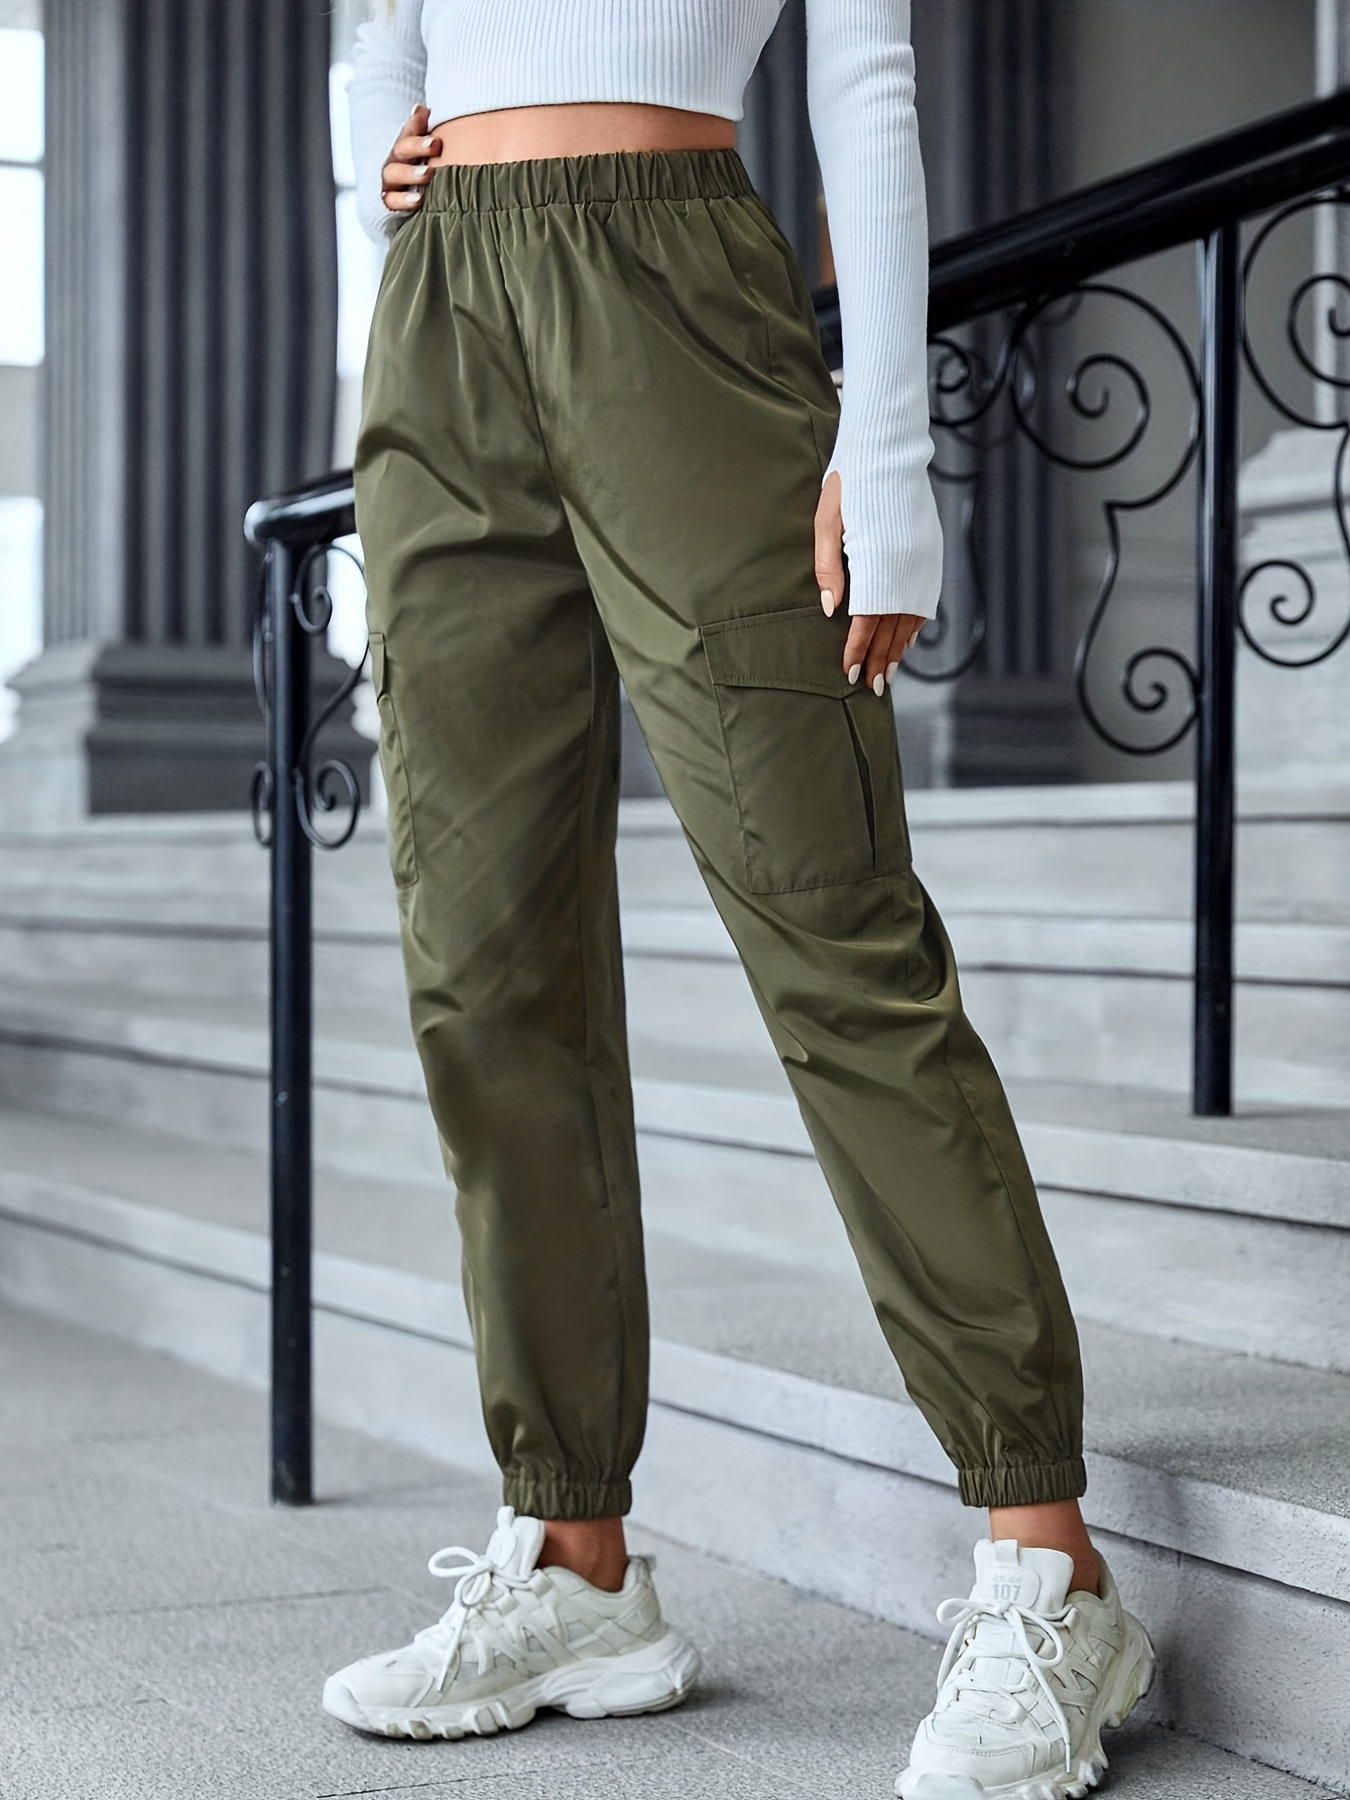 Green Casual Pants for Women - Pocket Pants, Cargo Pants